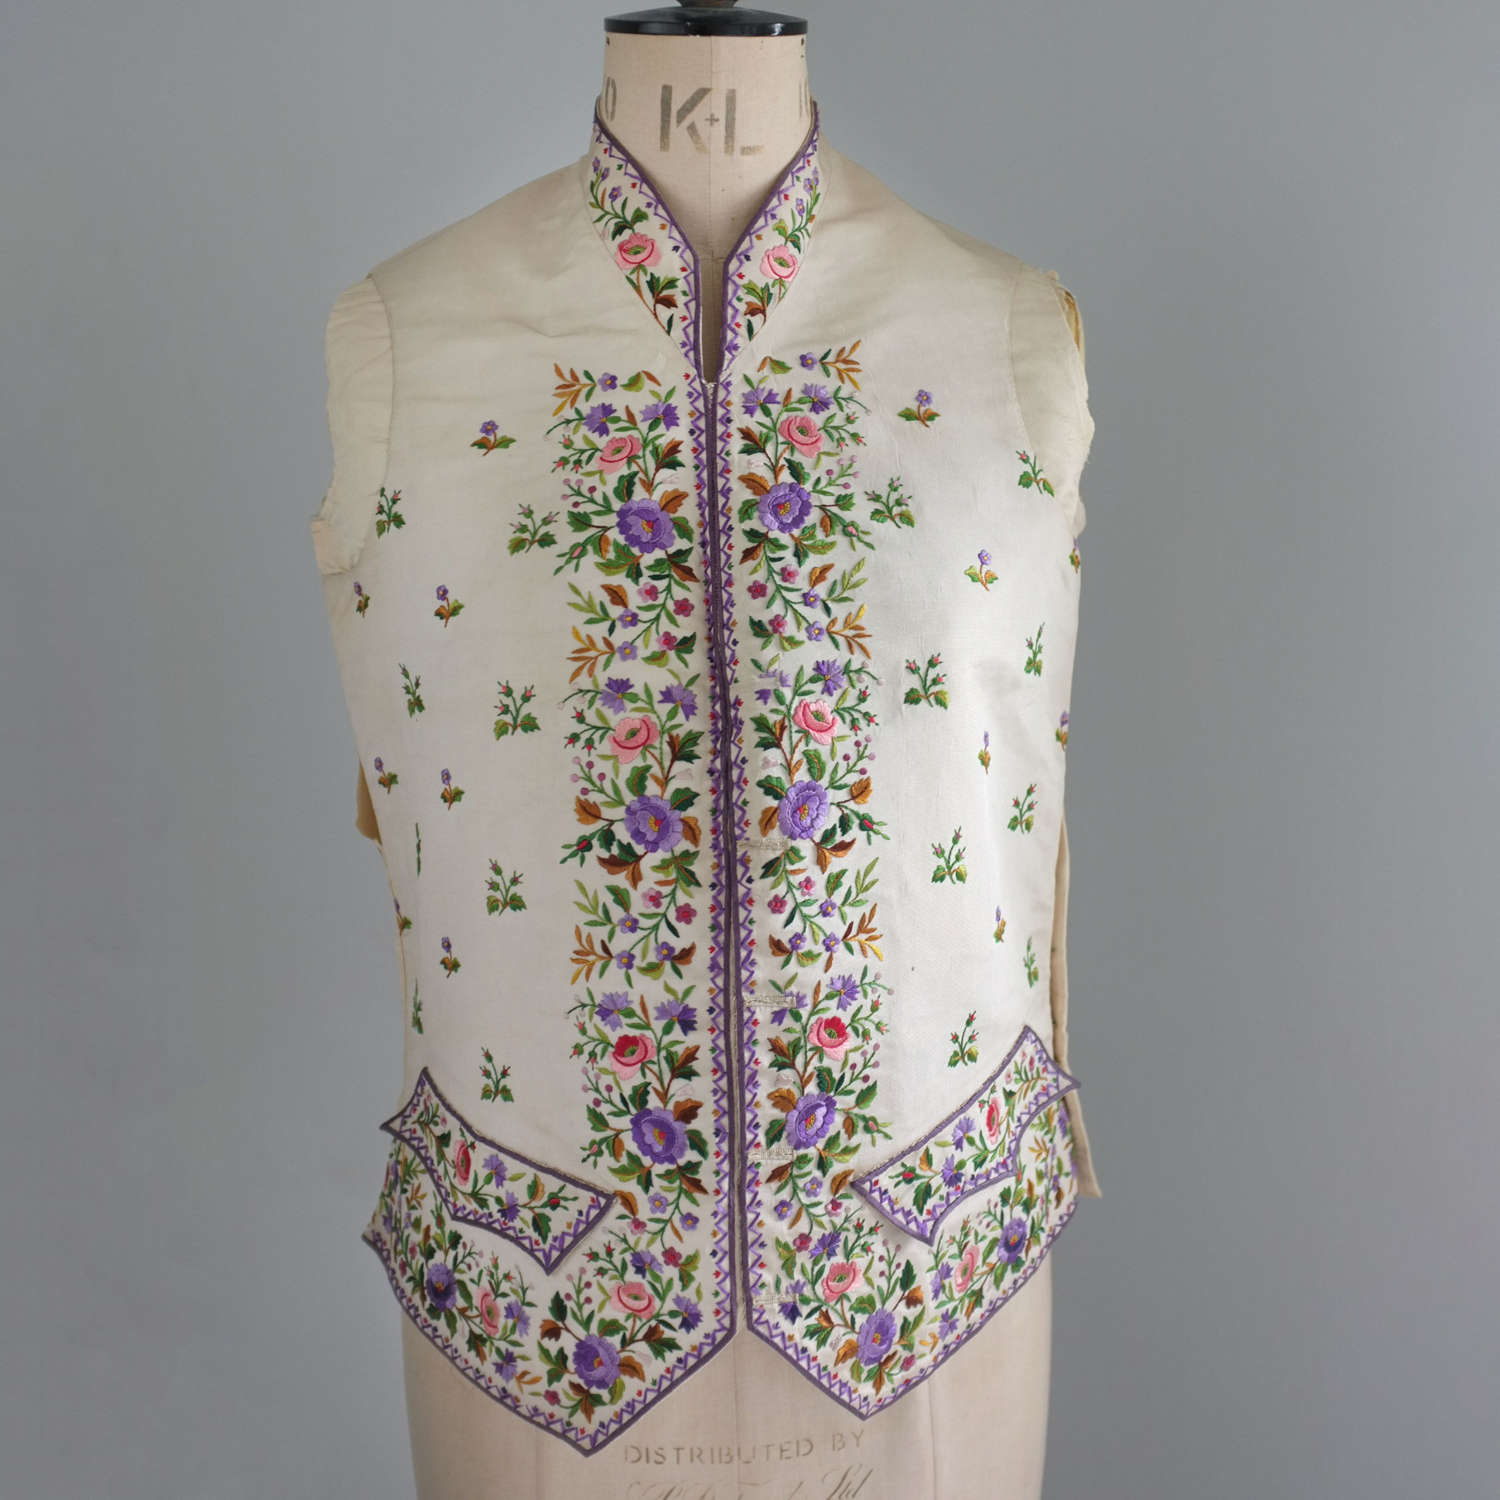 Antique 19th Century Gentleman's Embroidered Waistcoat